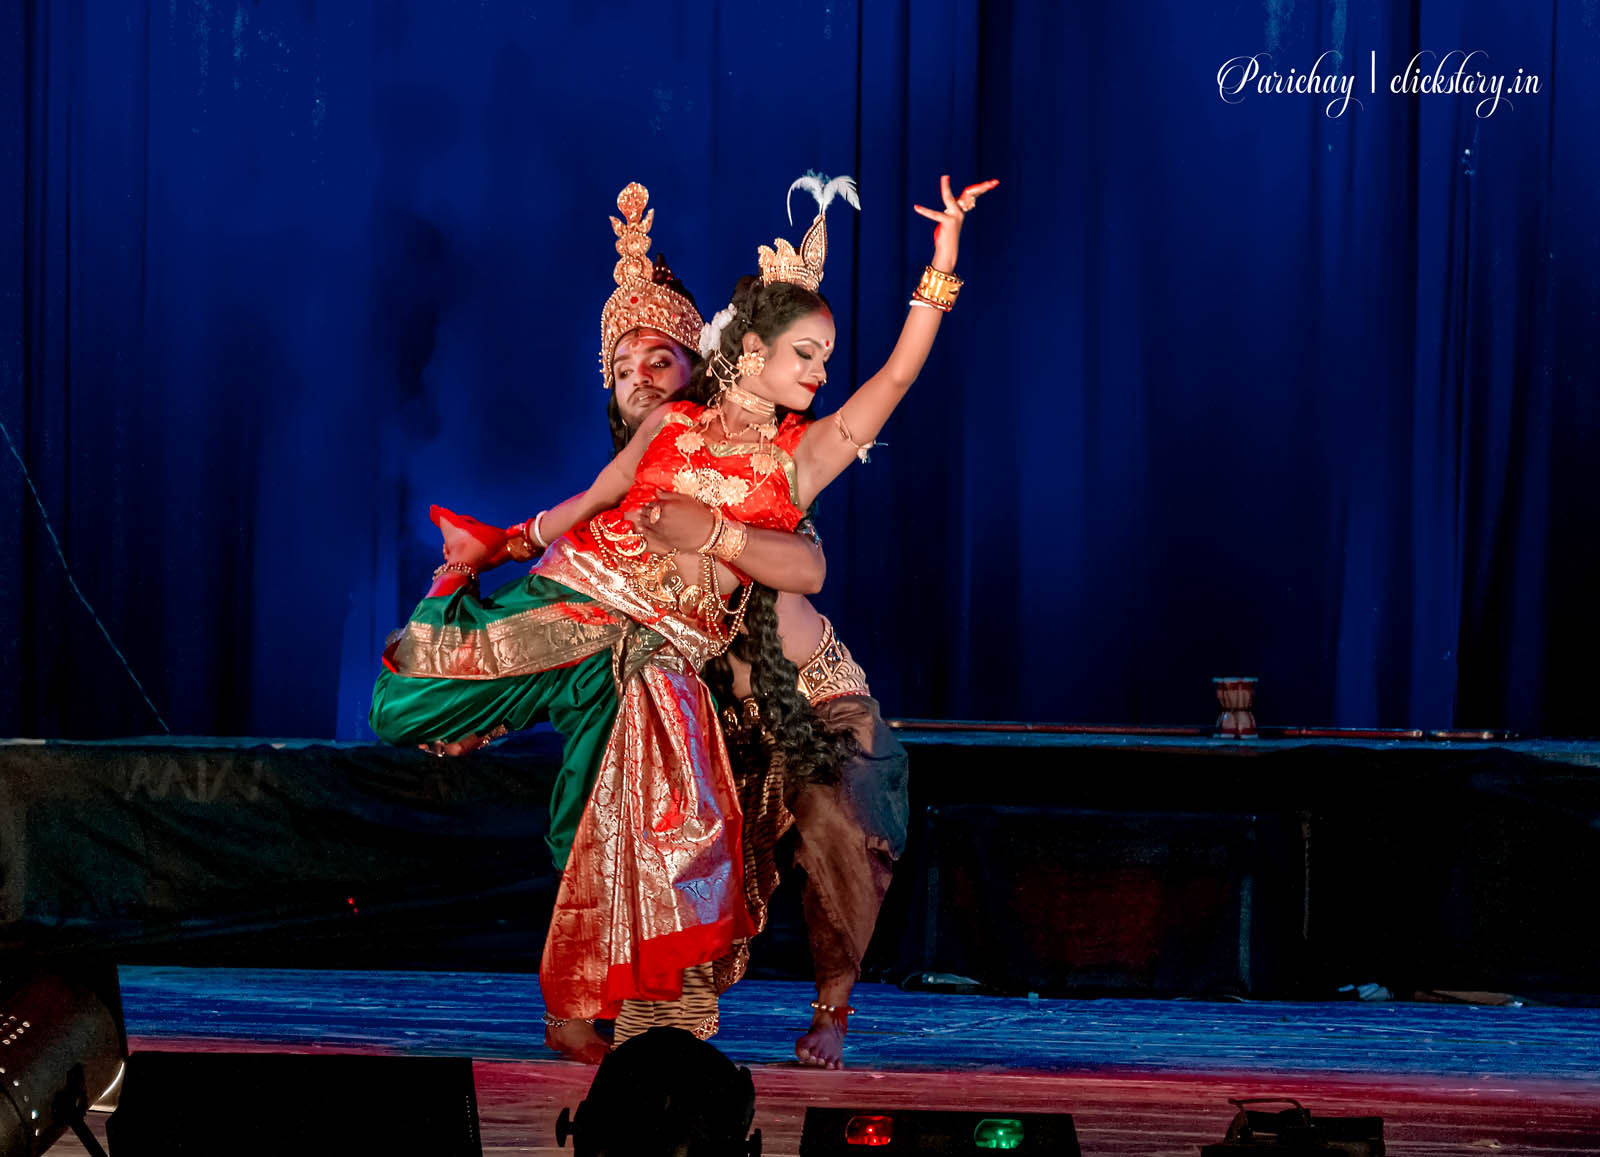 Latest Krishna Wallpaper and Krishna pictures: Radha-Krishna dancing photo